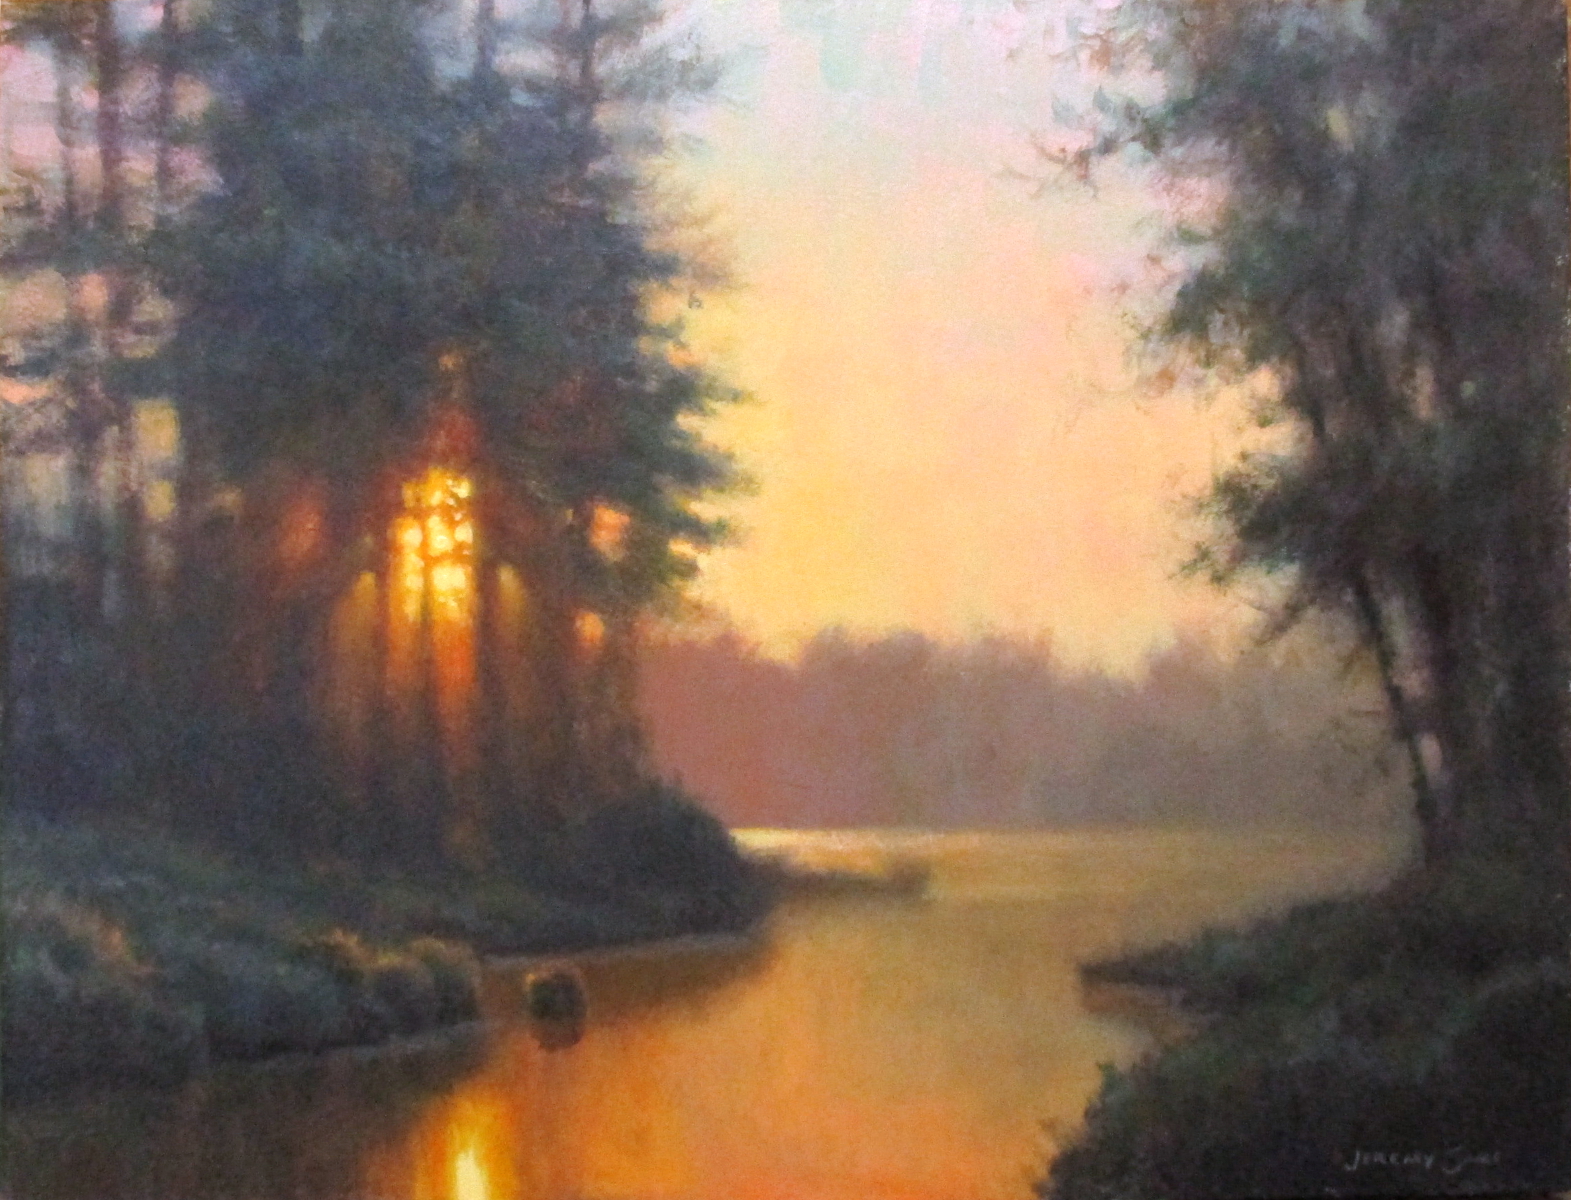 Original acrylic landscape painting of a sunset illuminating a river by North Carolina artist Jeremy Sams